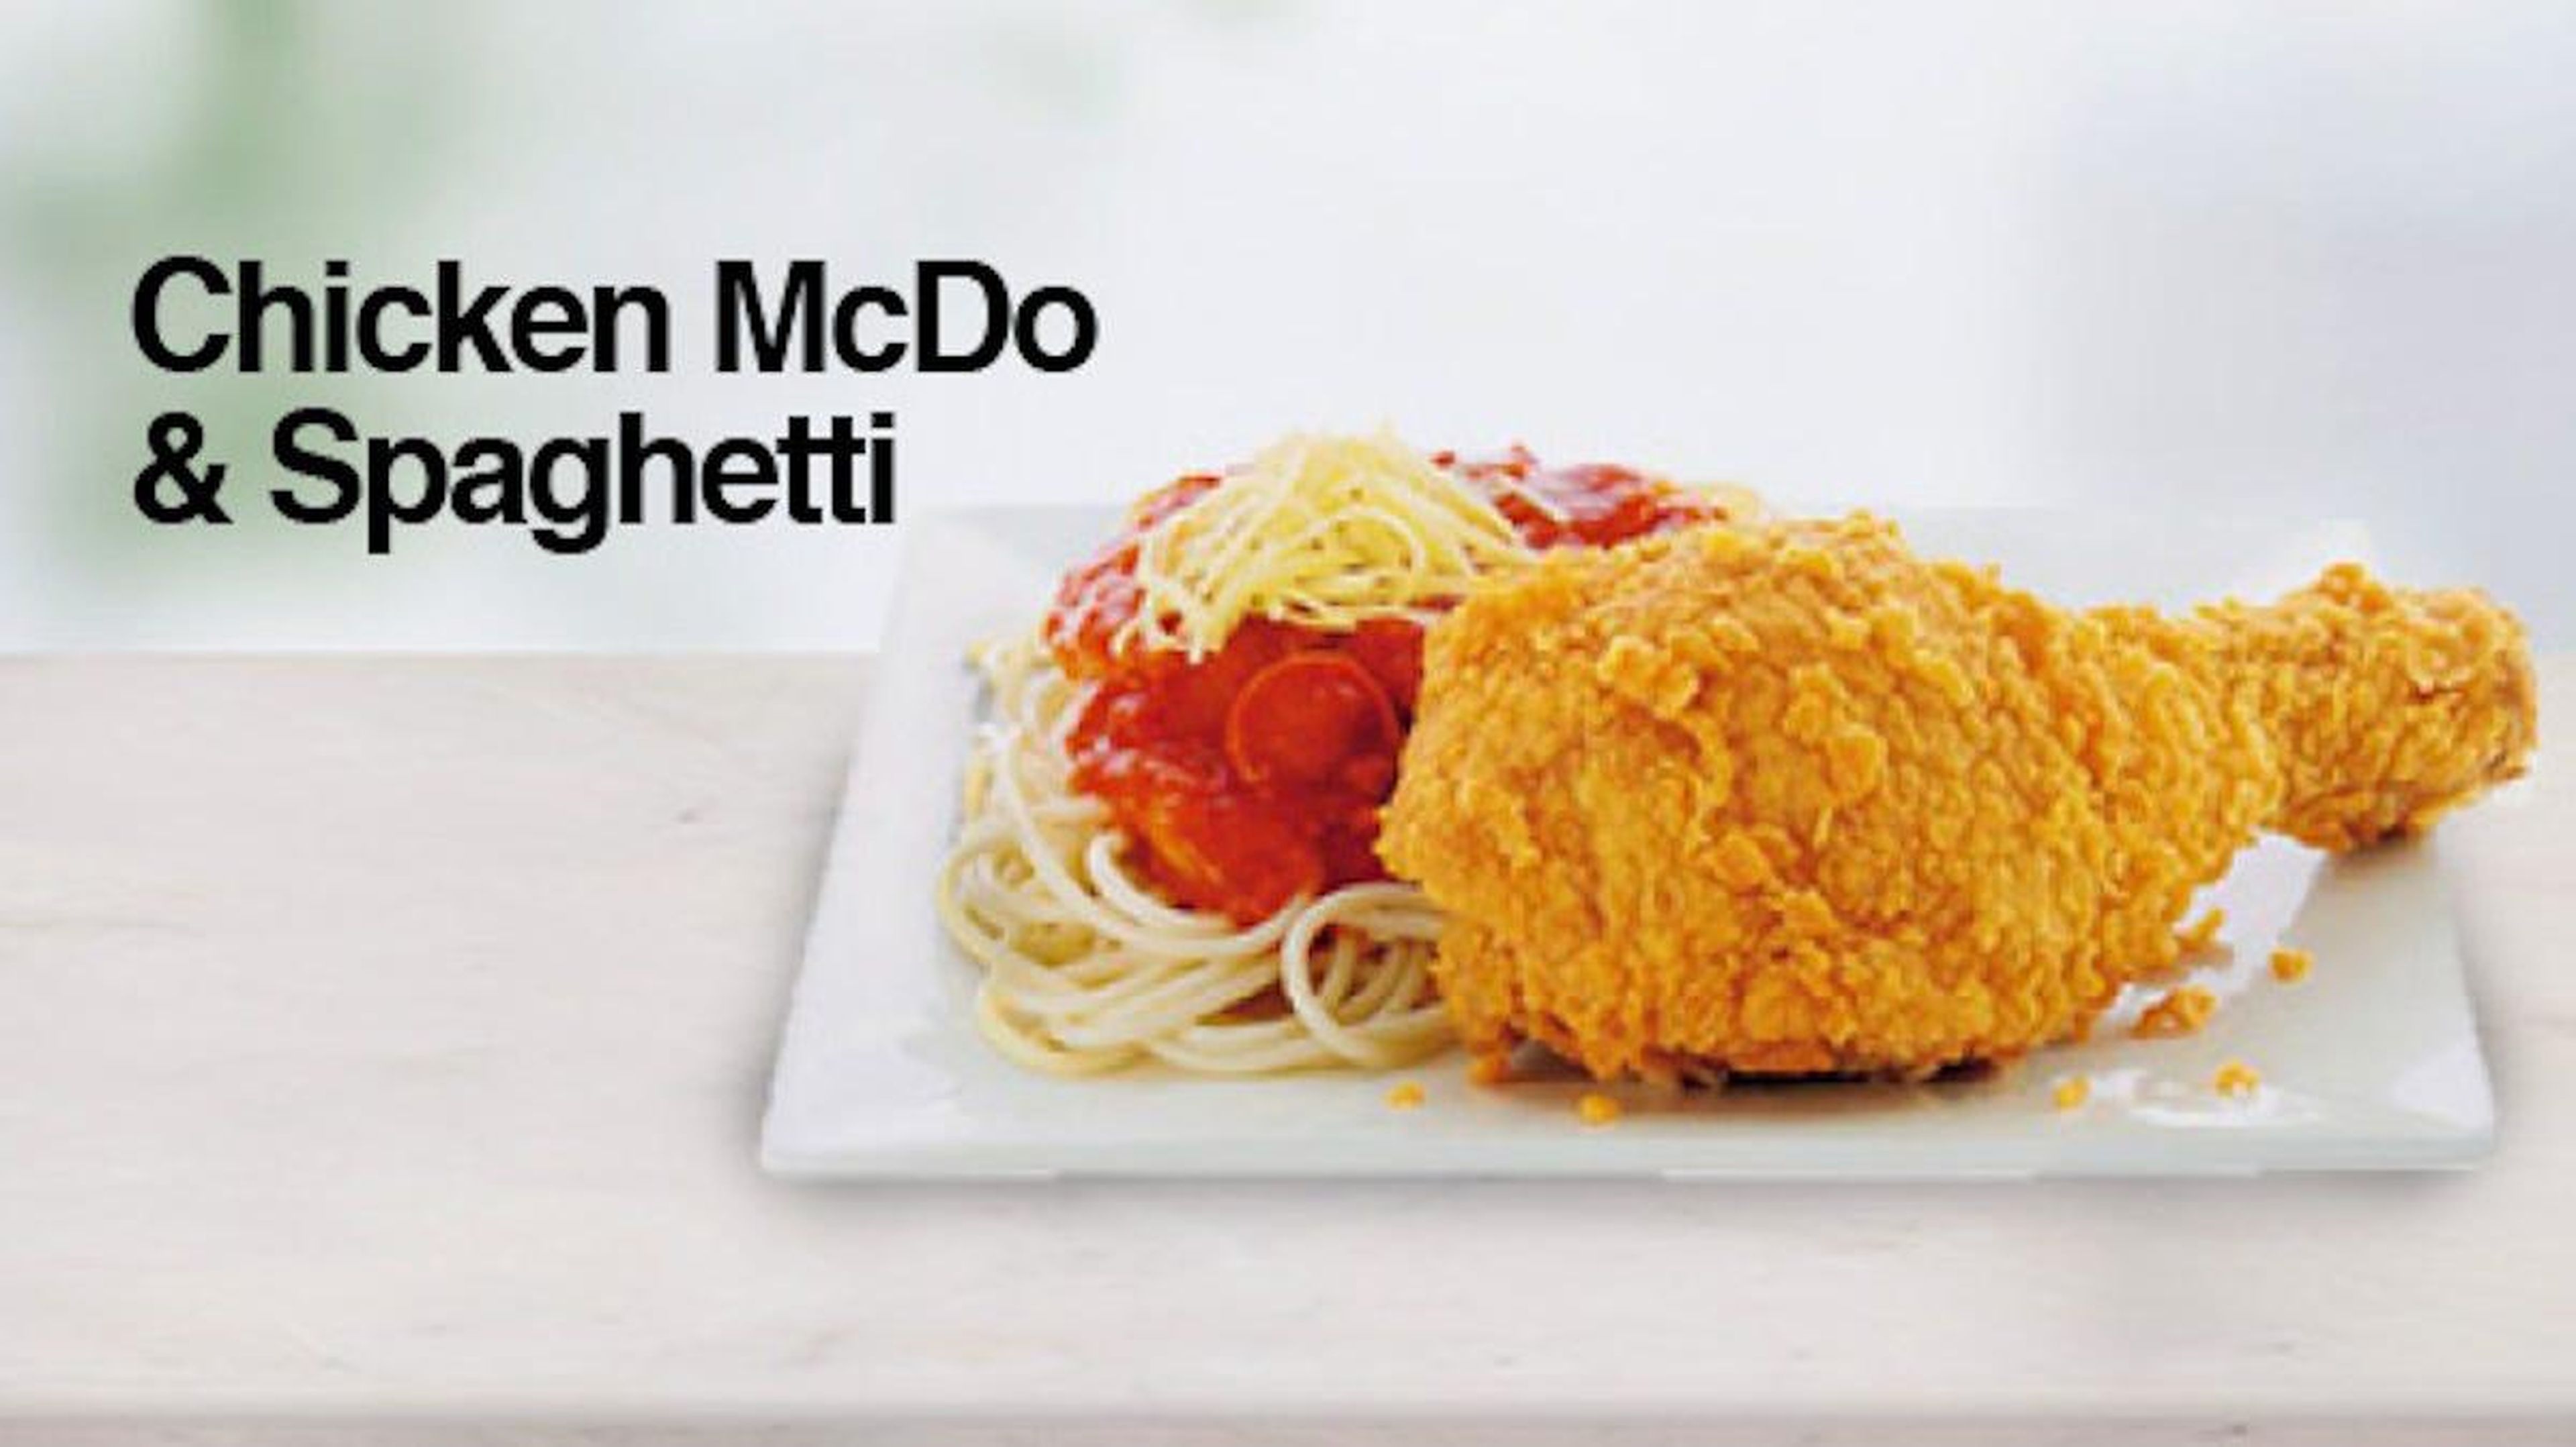 Chicken McDo & Spaghetti.